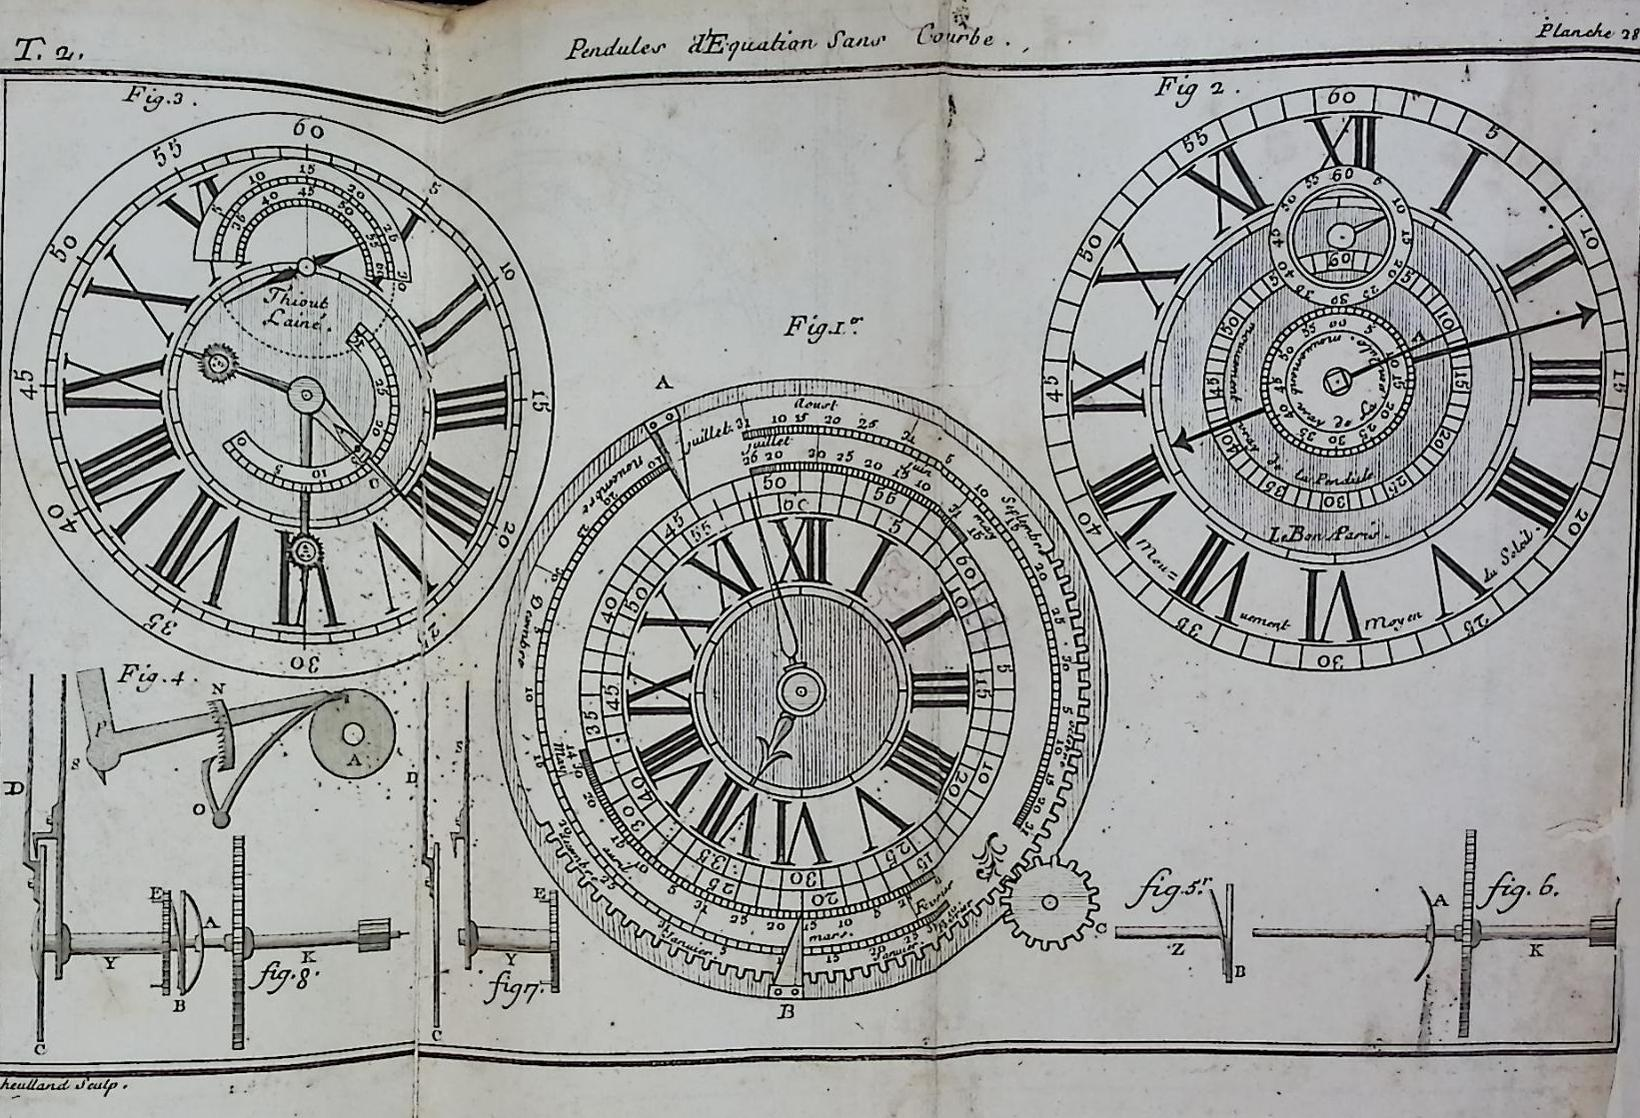 Trait de L'Horlogerie Mchanique et Practique. Tome Second. [Treatise on Mechanical and Practical Watchmaking. Volume Two].